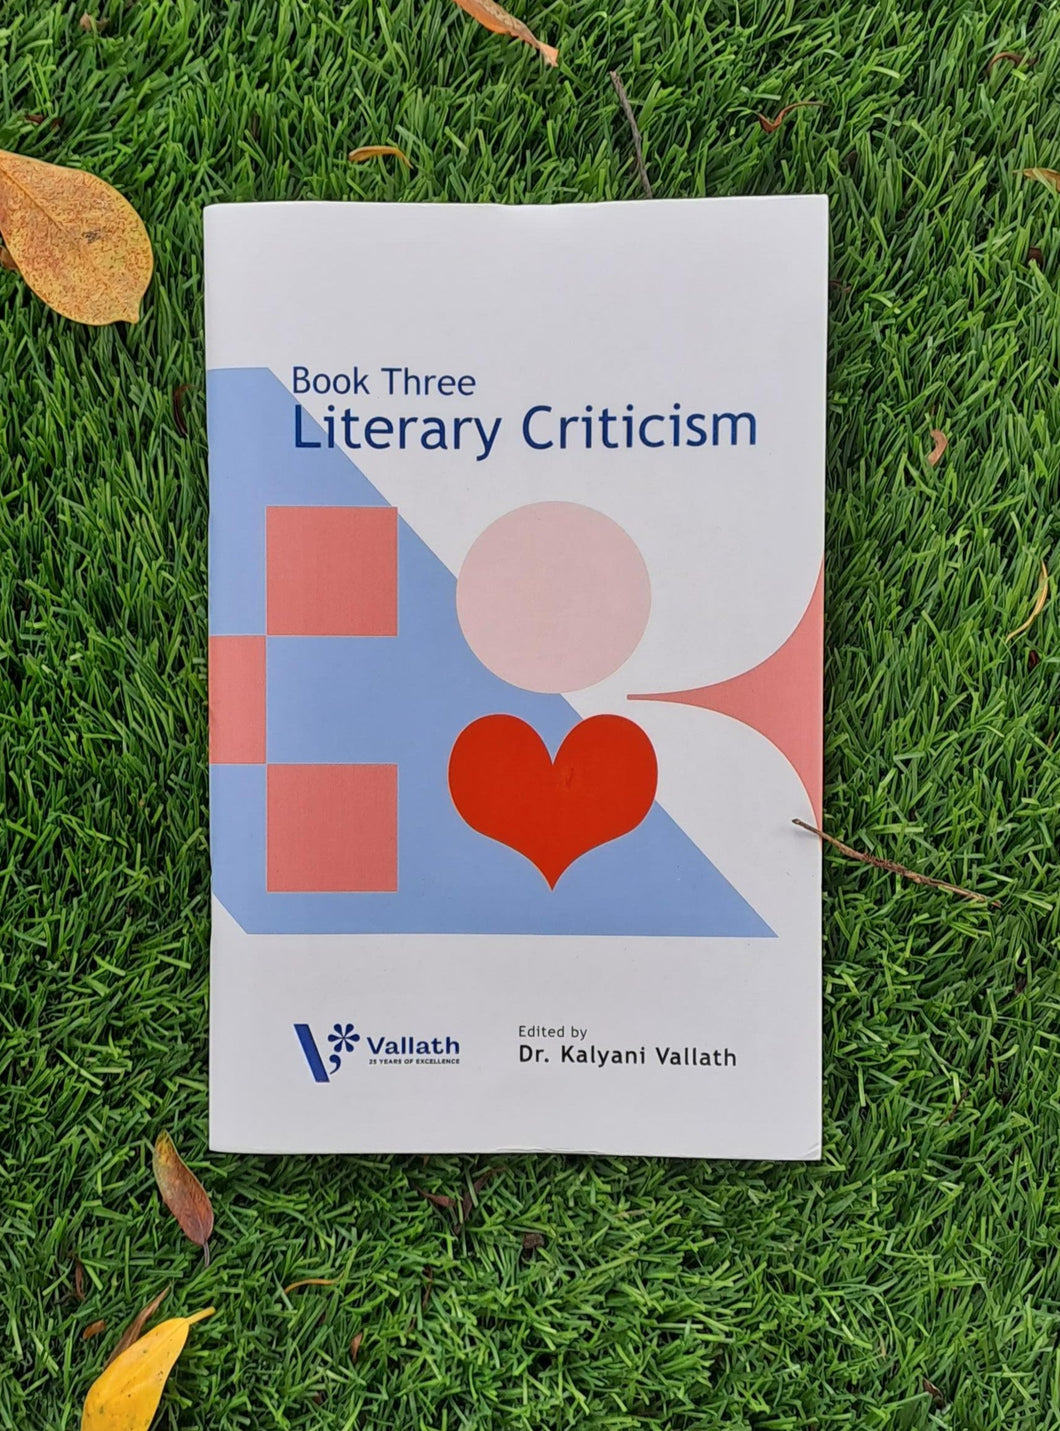 Book 3 - A Companion to Literary Criticism